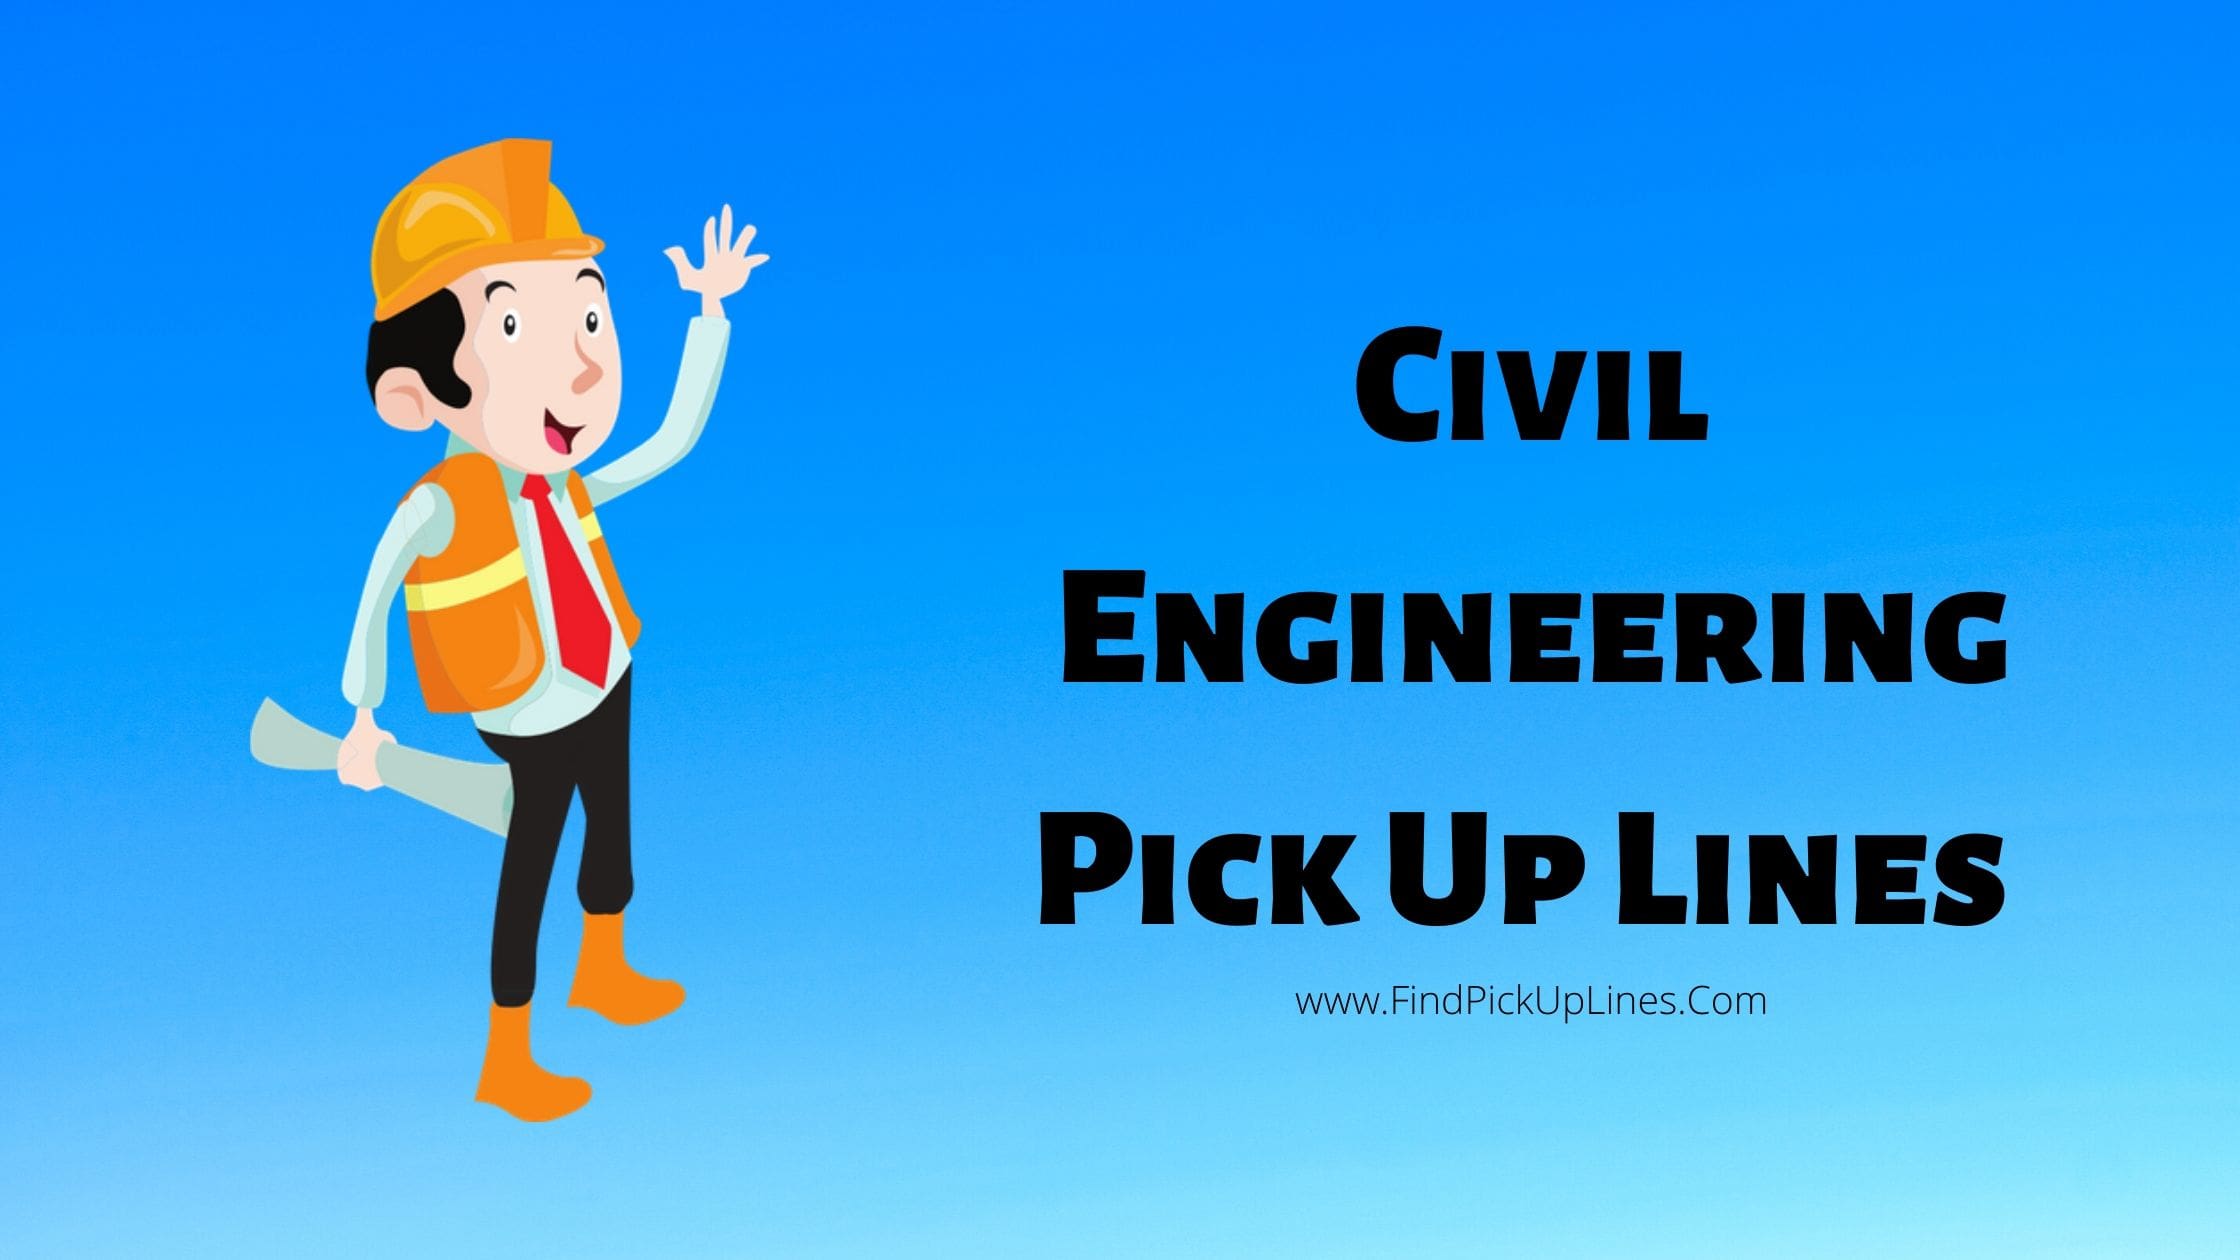 Civil Engineering Pick Up Lines